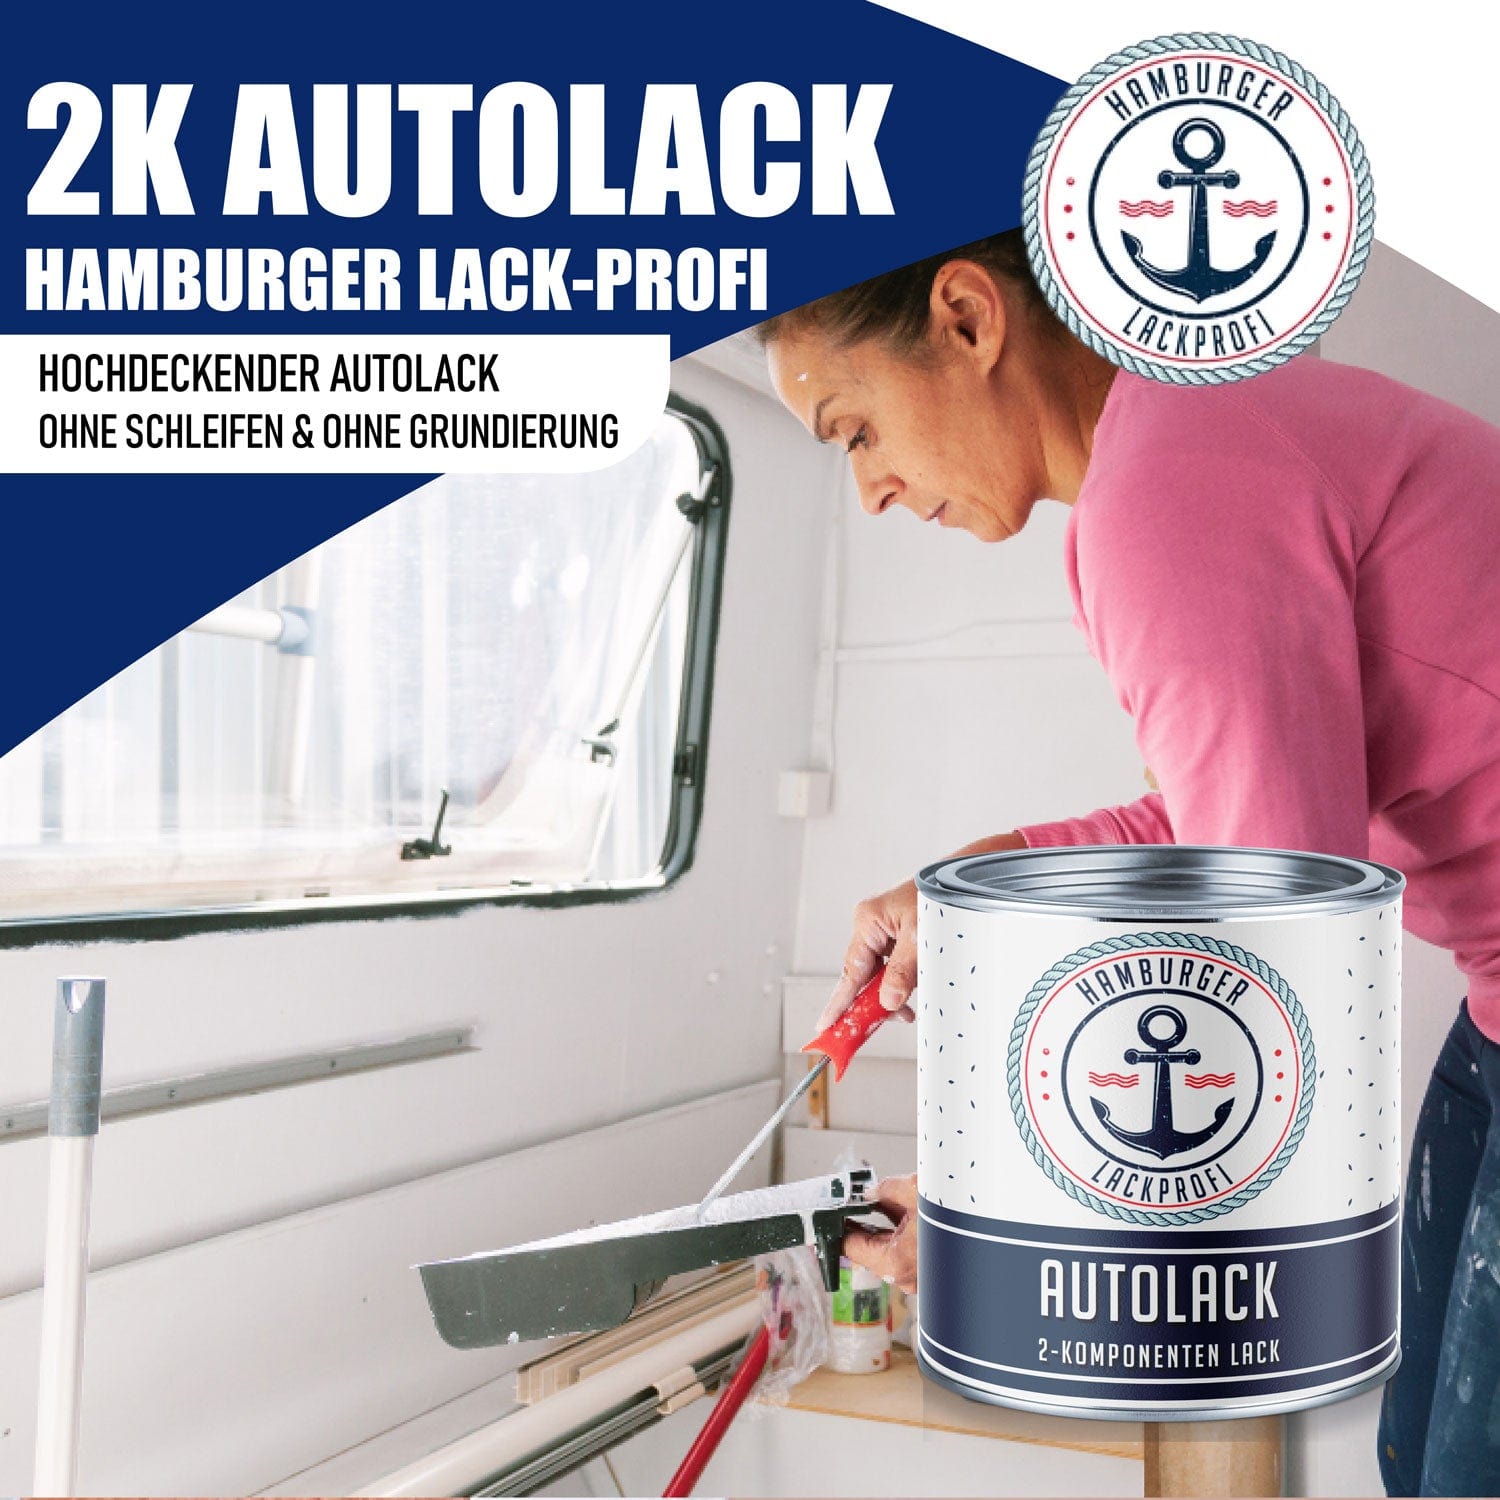 Hamburger Lack-Profi Lacke & Beschichtungen Hamburger Lack-Profi 2K Autolack in Seidengrau RAL 7044 mit Lackierset (X300) & Verdünnung (1 L) - 30% Sparangebot